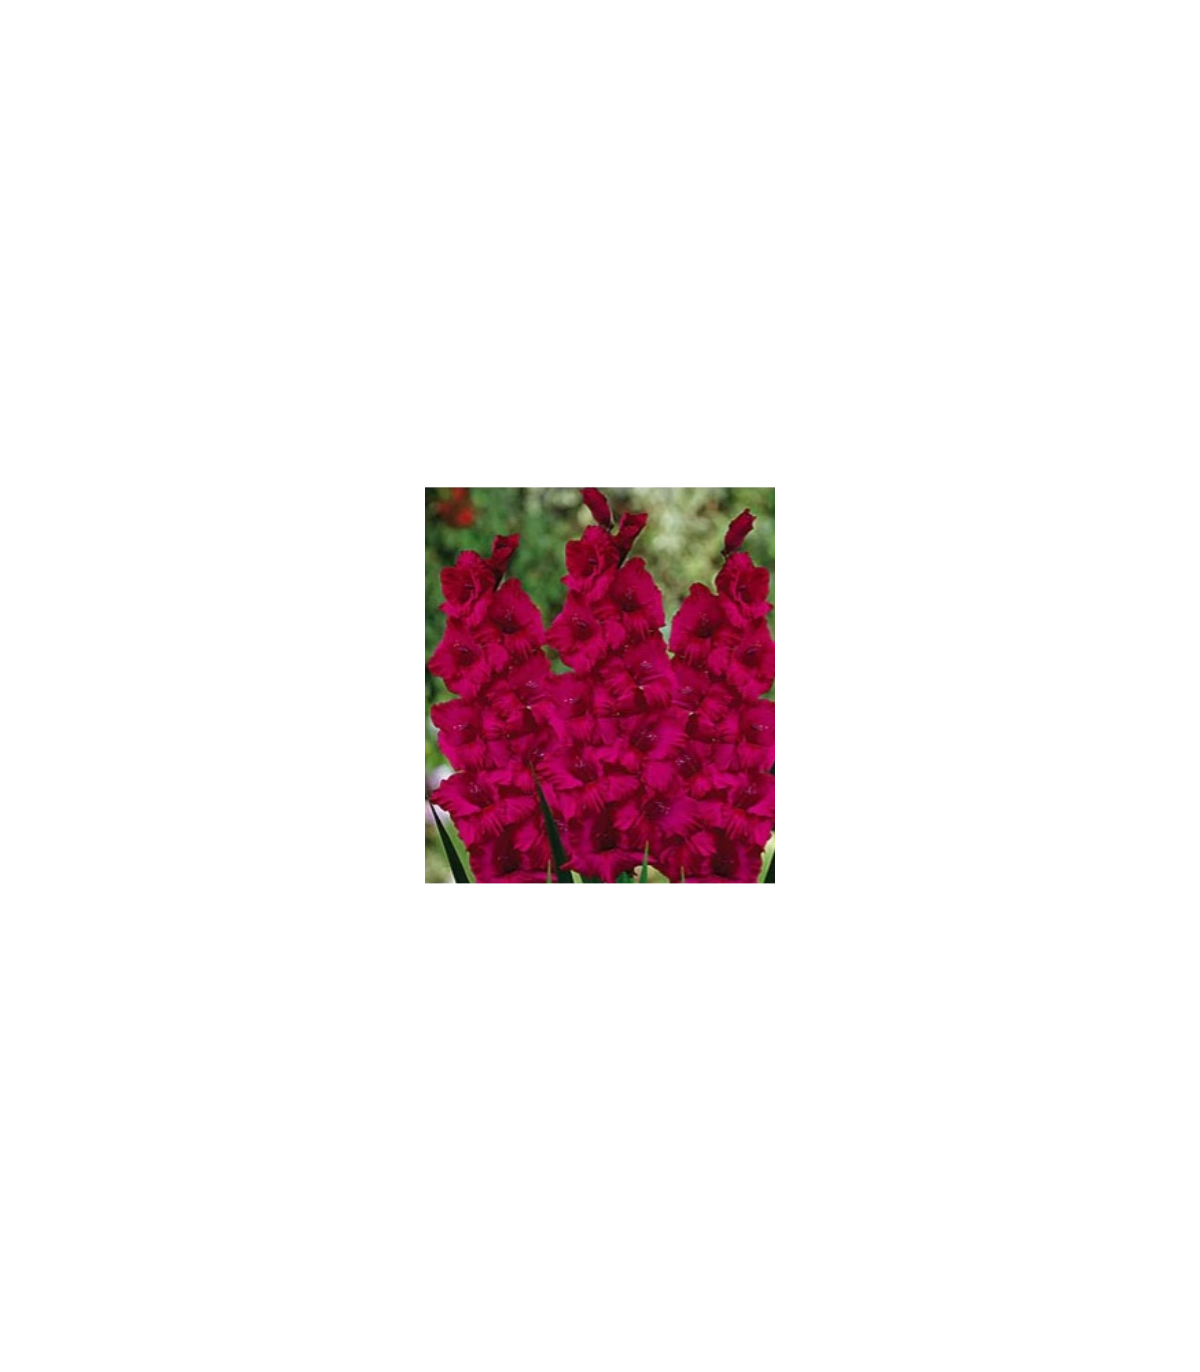 Gladiola Plum Tart - Gladiolus byzantinus - predaj cibuľovín - 3 ks